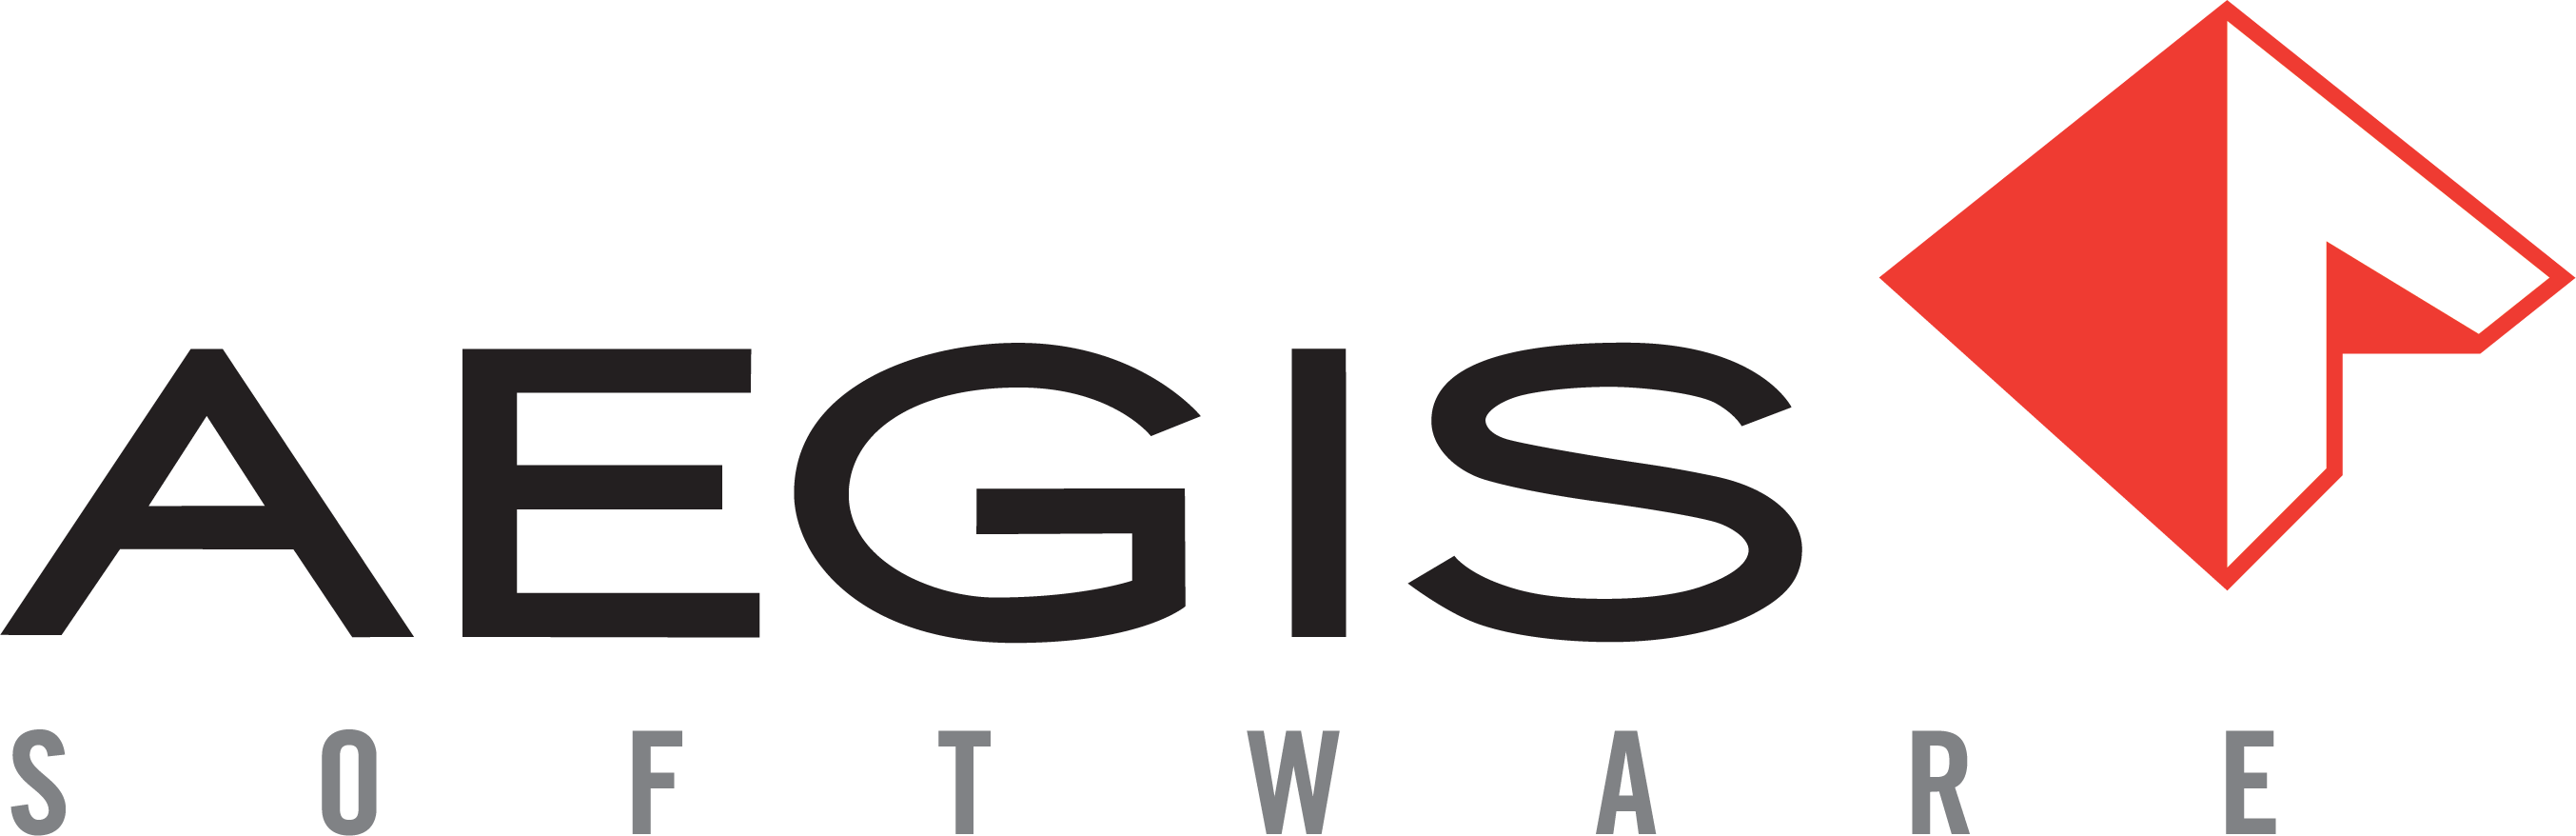 Aegis Corp Software Logo